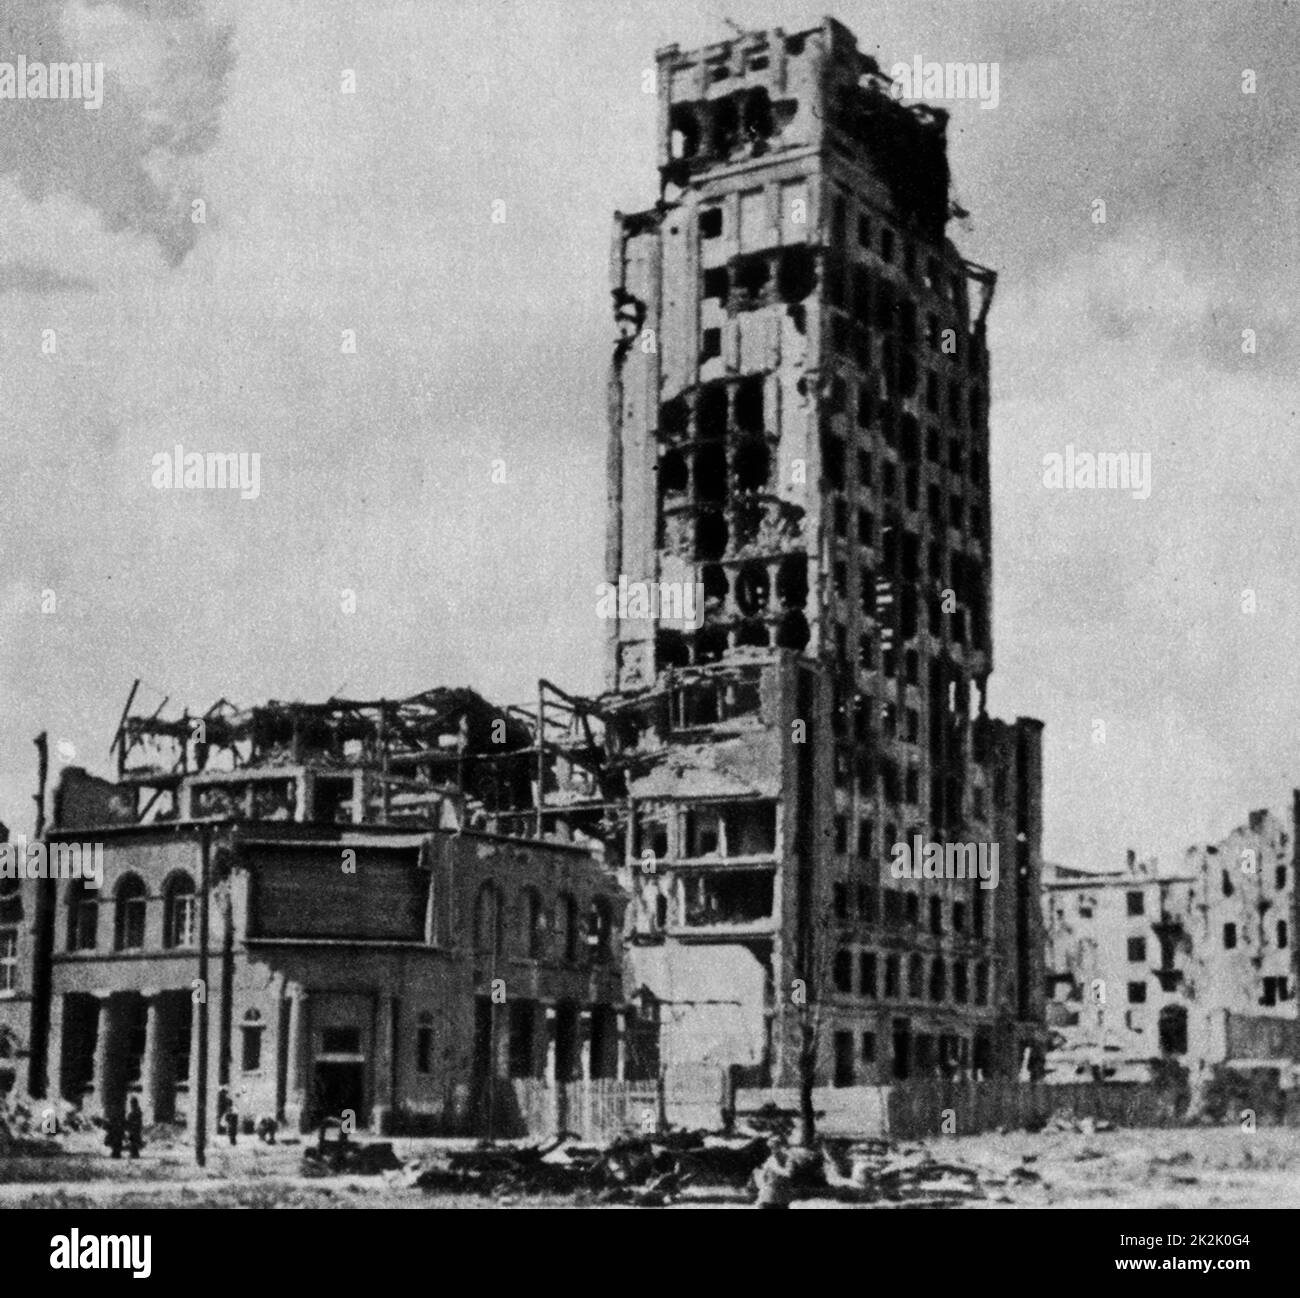 The Prudential Buildin in ruins, Warsaw Photo taken in 1945.World War II Stock Photo